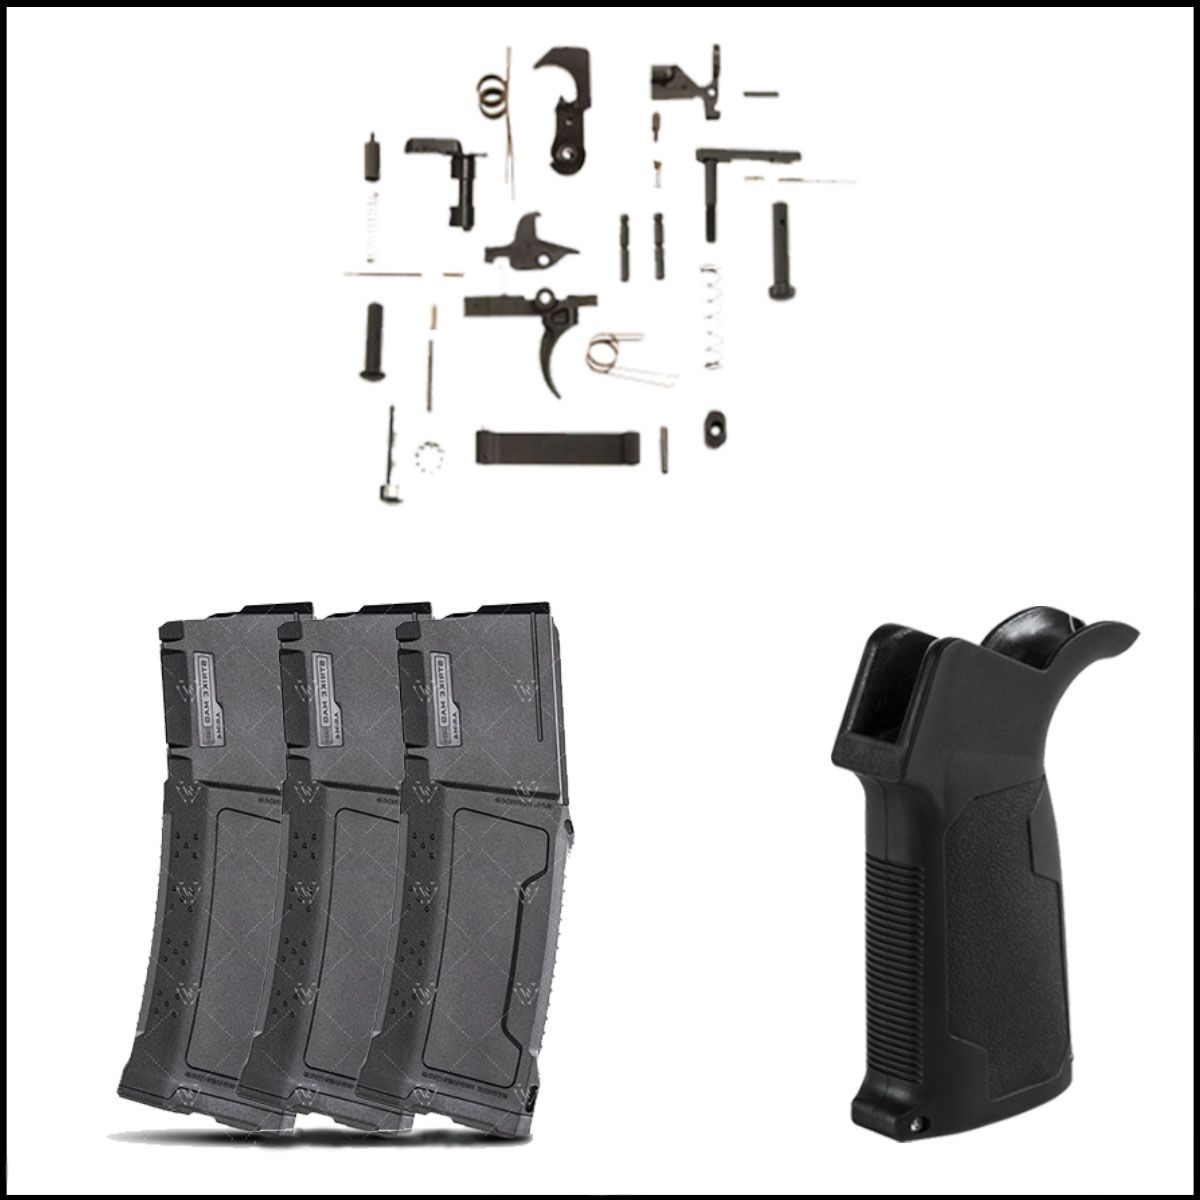 Stocking Stuffer Lower Starting Kits: Strike Industries AR-15 Magazine + Recoil Technologies AR-15 Lower Parts Kit + VISM AR-15  Pistol Grip With Bottom Storage Compartment